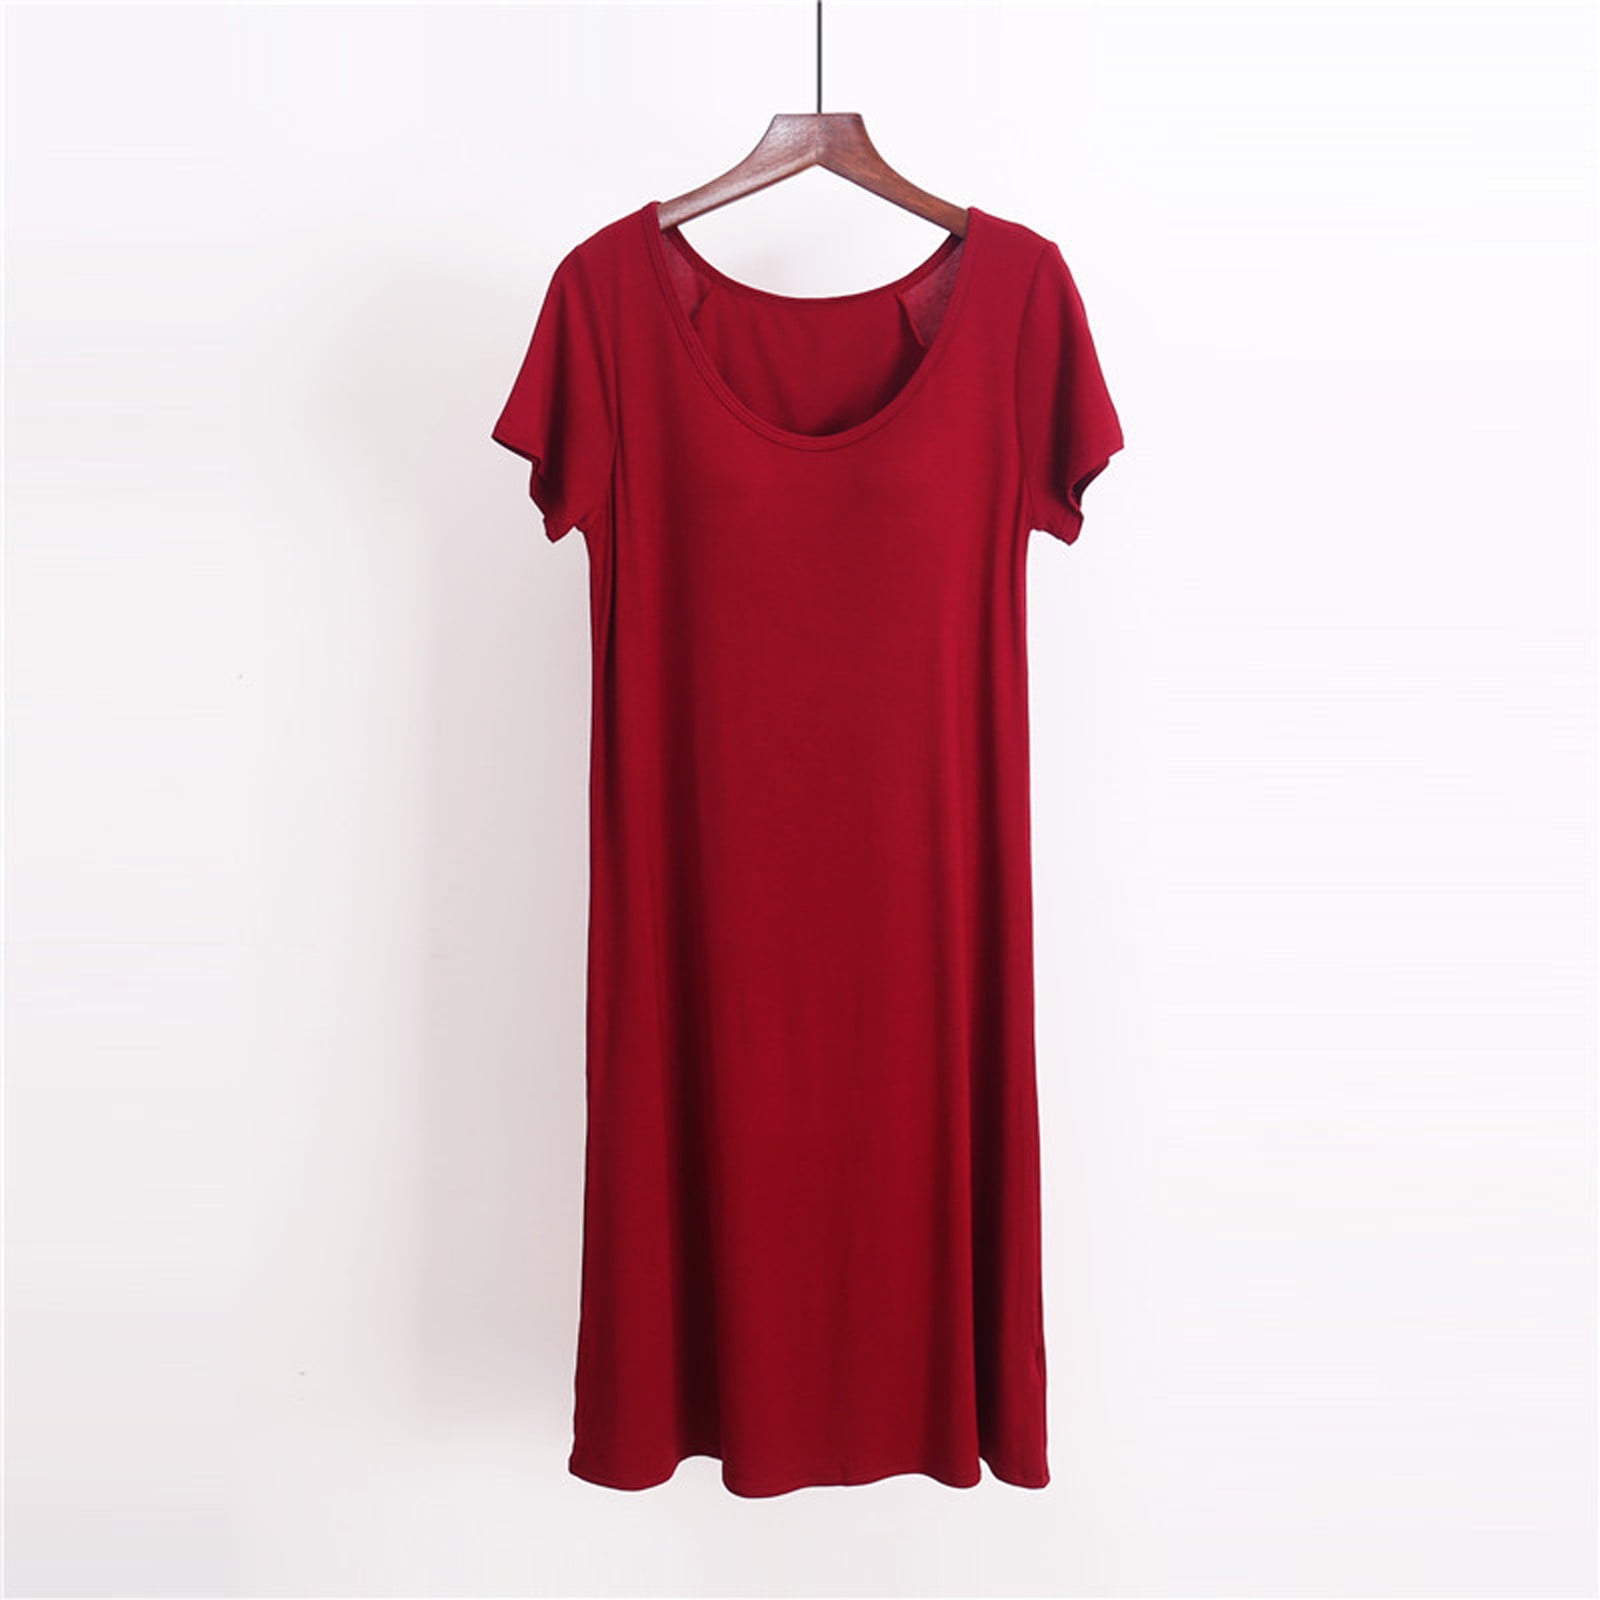 FAKKDUK Womens Plus Size Sleepwear Nightgowns for Women Soft Cotton ...